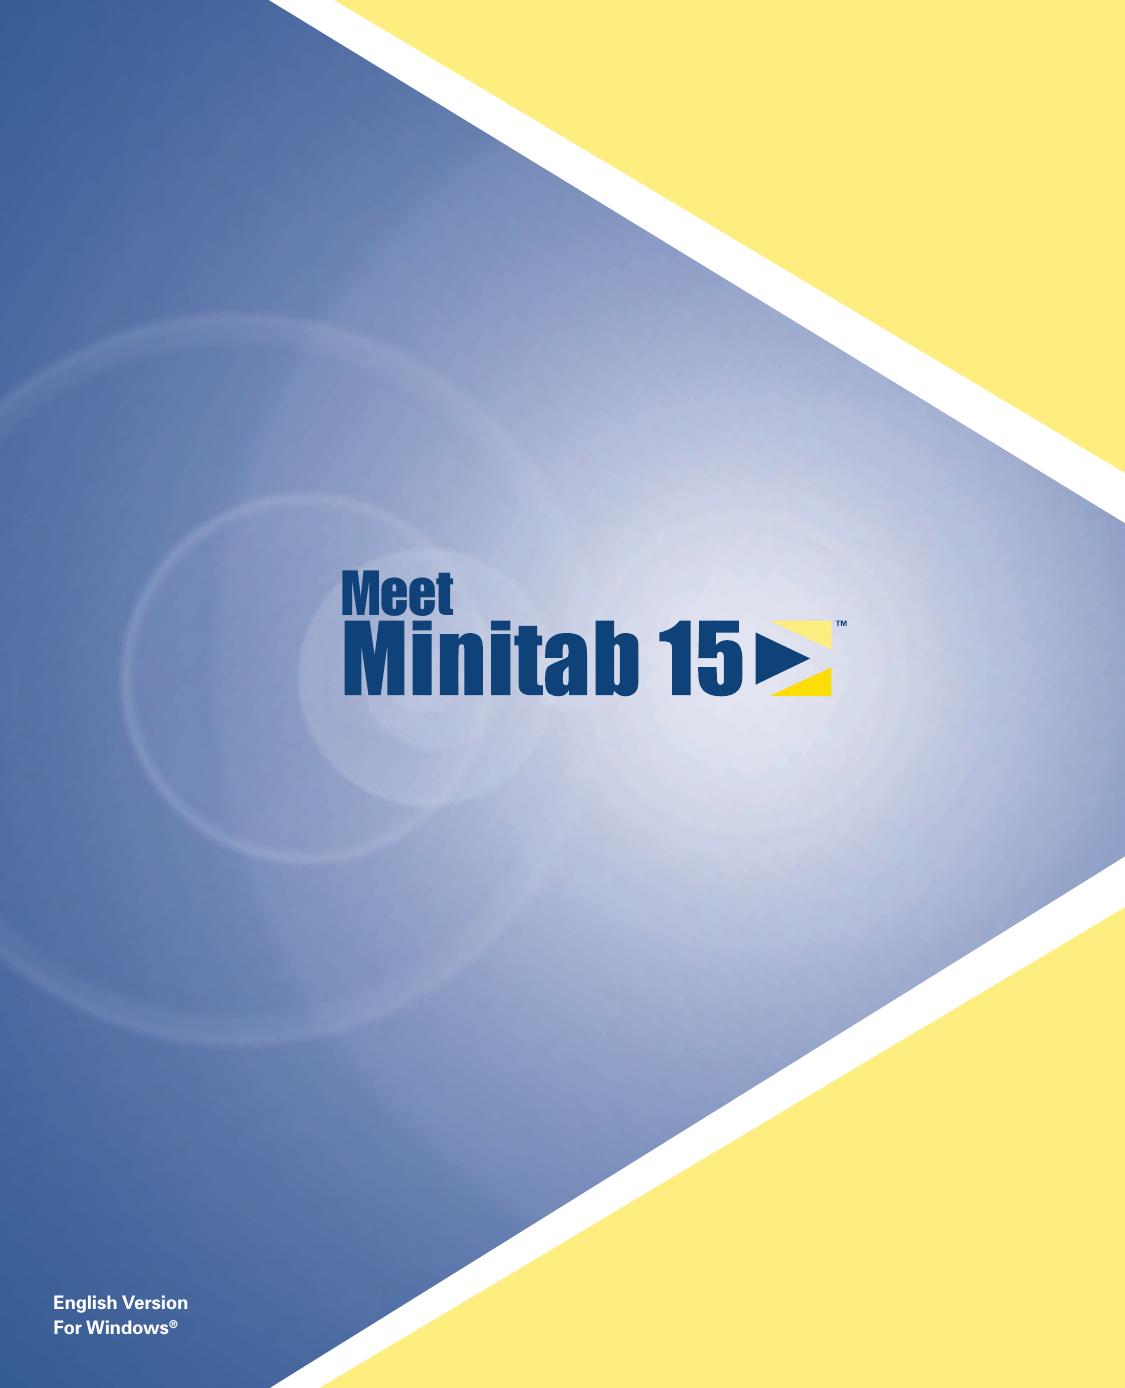 Meet Minitab 15